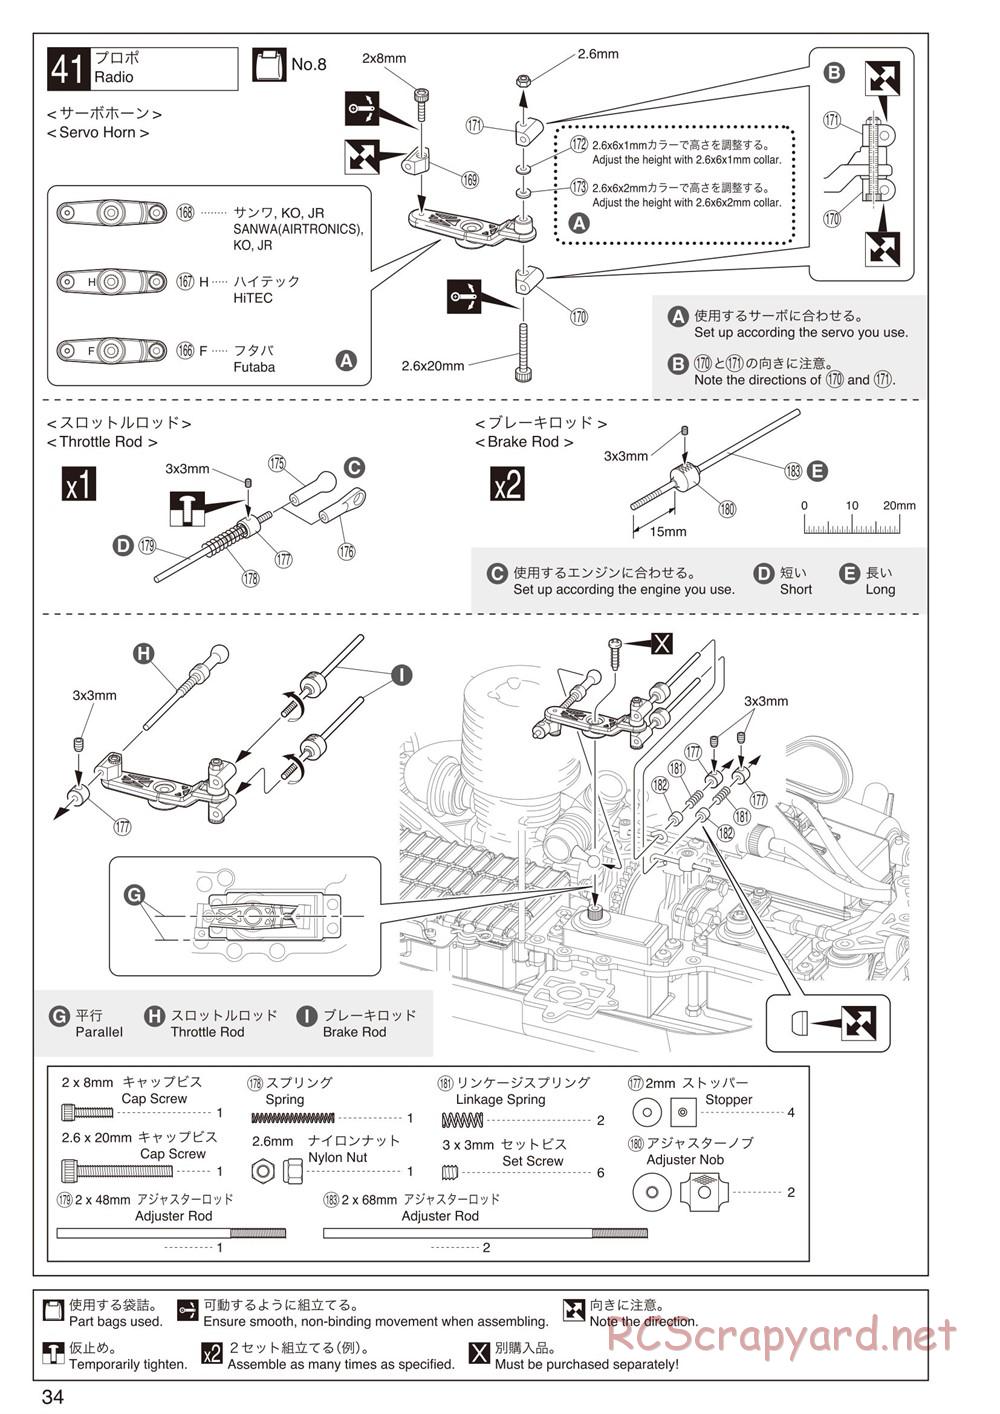 Kyosho - Inferno MP9 TKI2 - Manual - Page 34